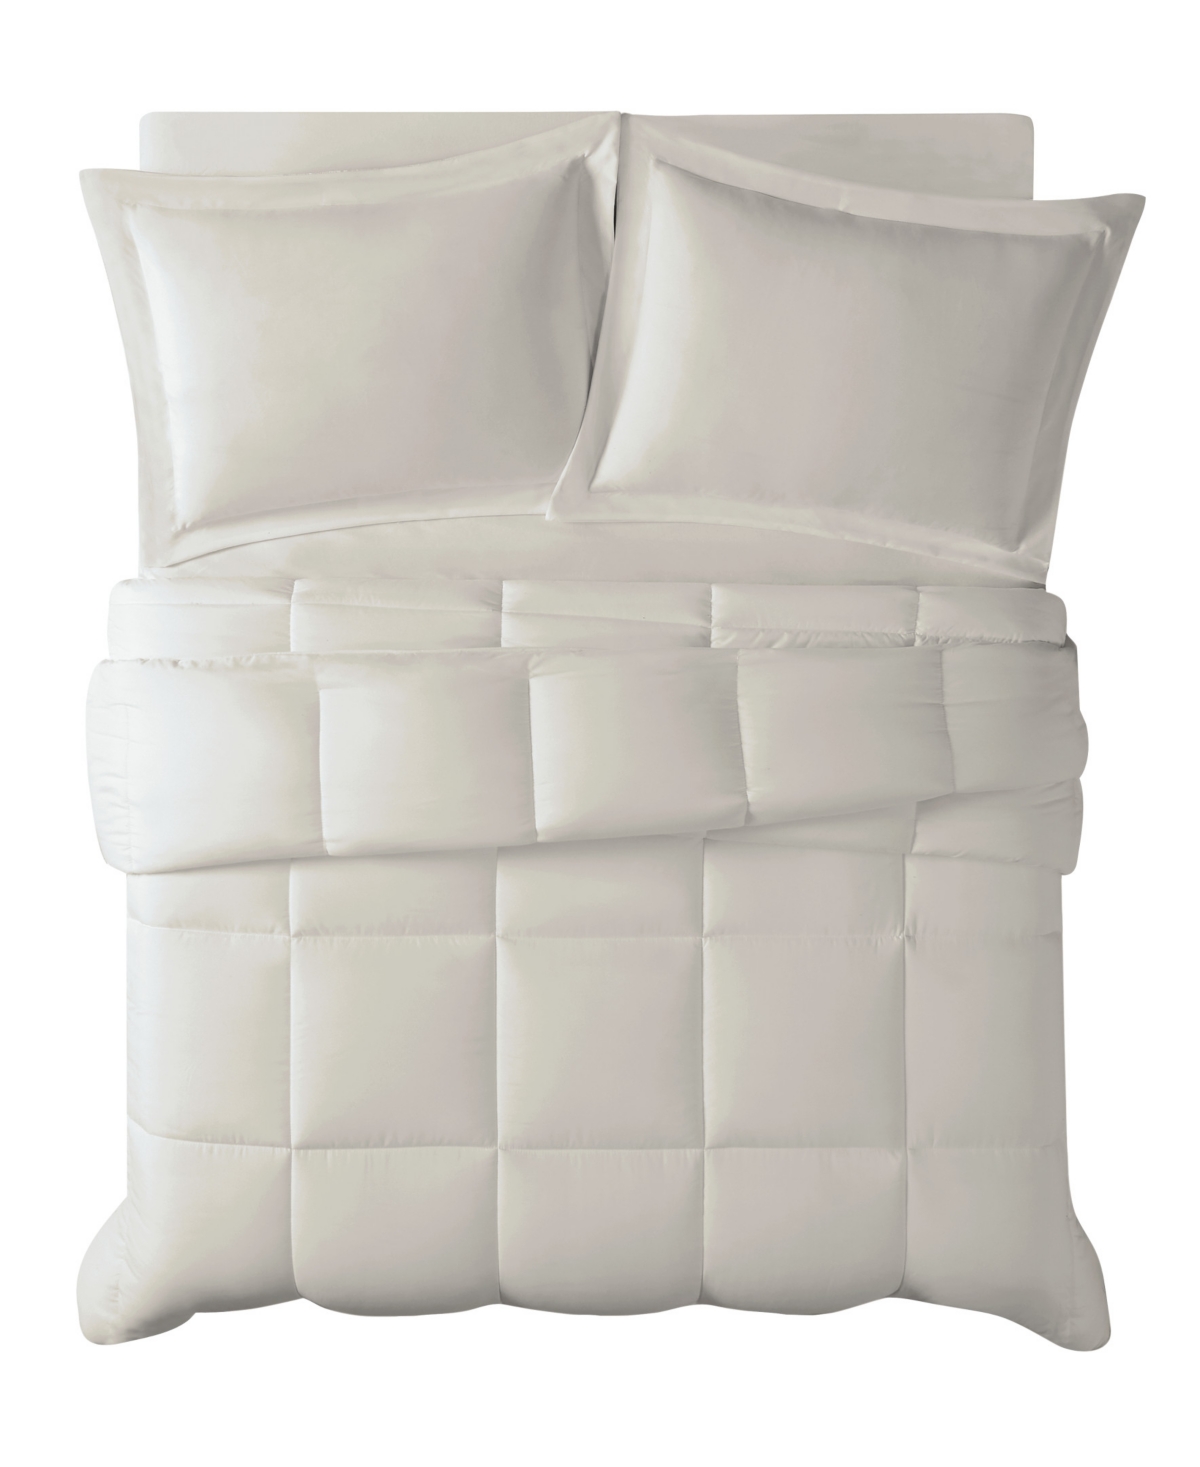 Truly Calm Antimicrobial Down Alternative 2 Piece Comforter Set, Twin/twin Xl In Beige,khak